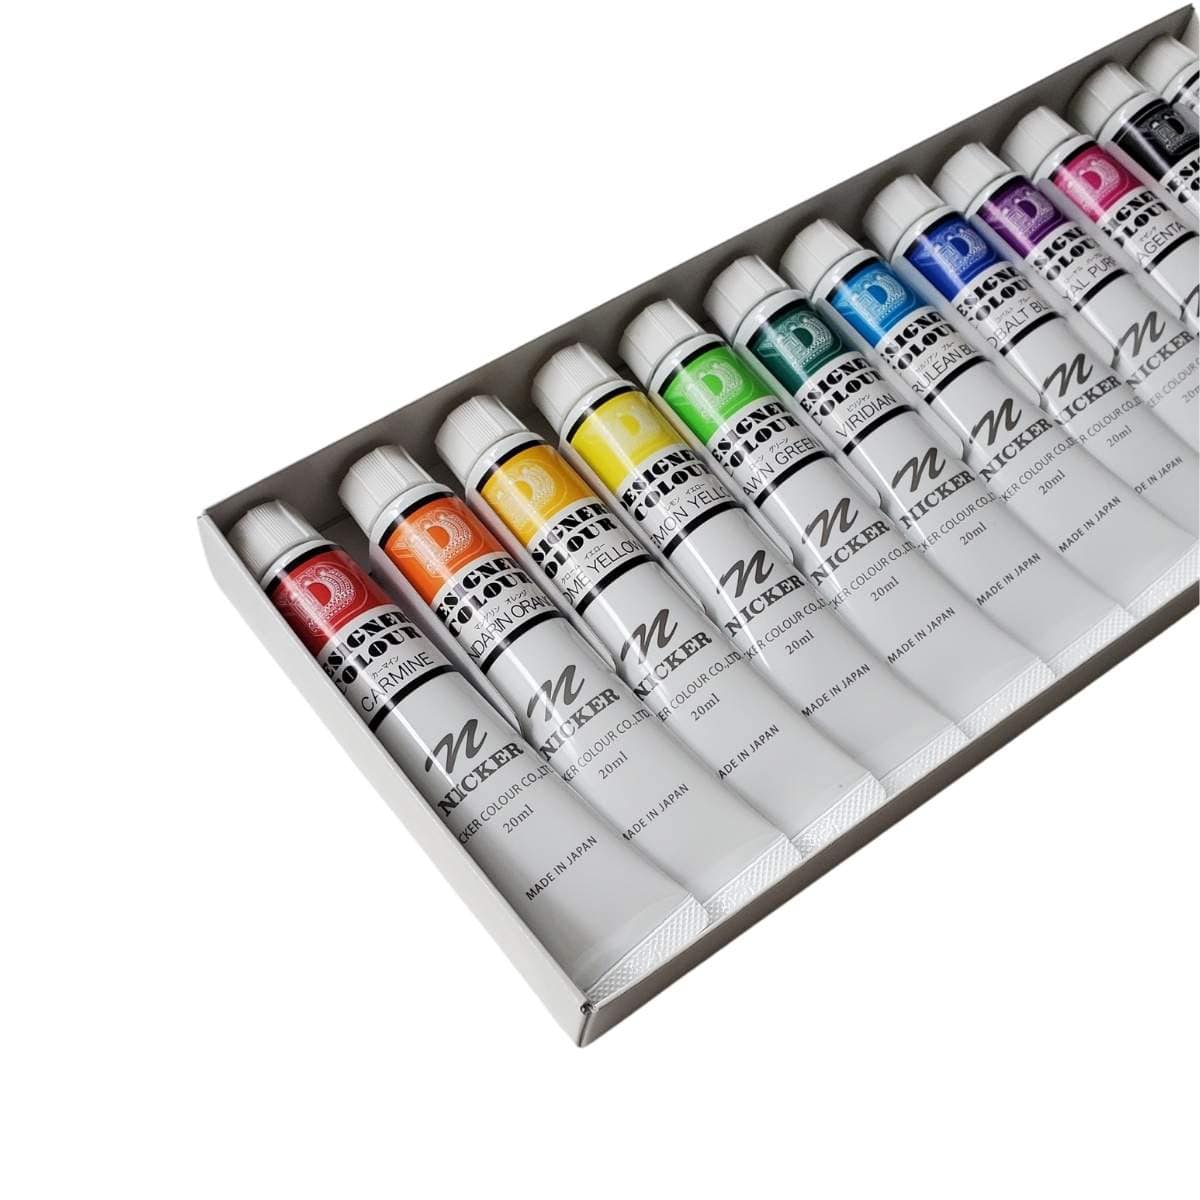 Nicker Colour GOUACHE SET Nicker - Designers Colour Gouache - Set of 12 Colours - 20mL Tubes - Item #DC20ML12